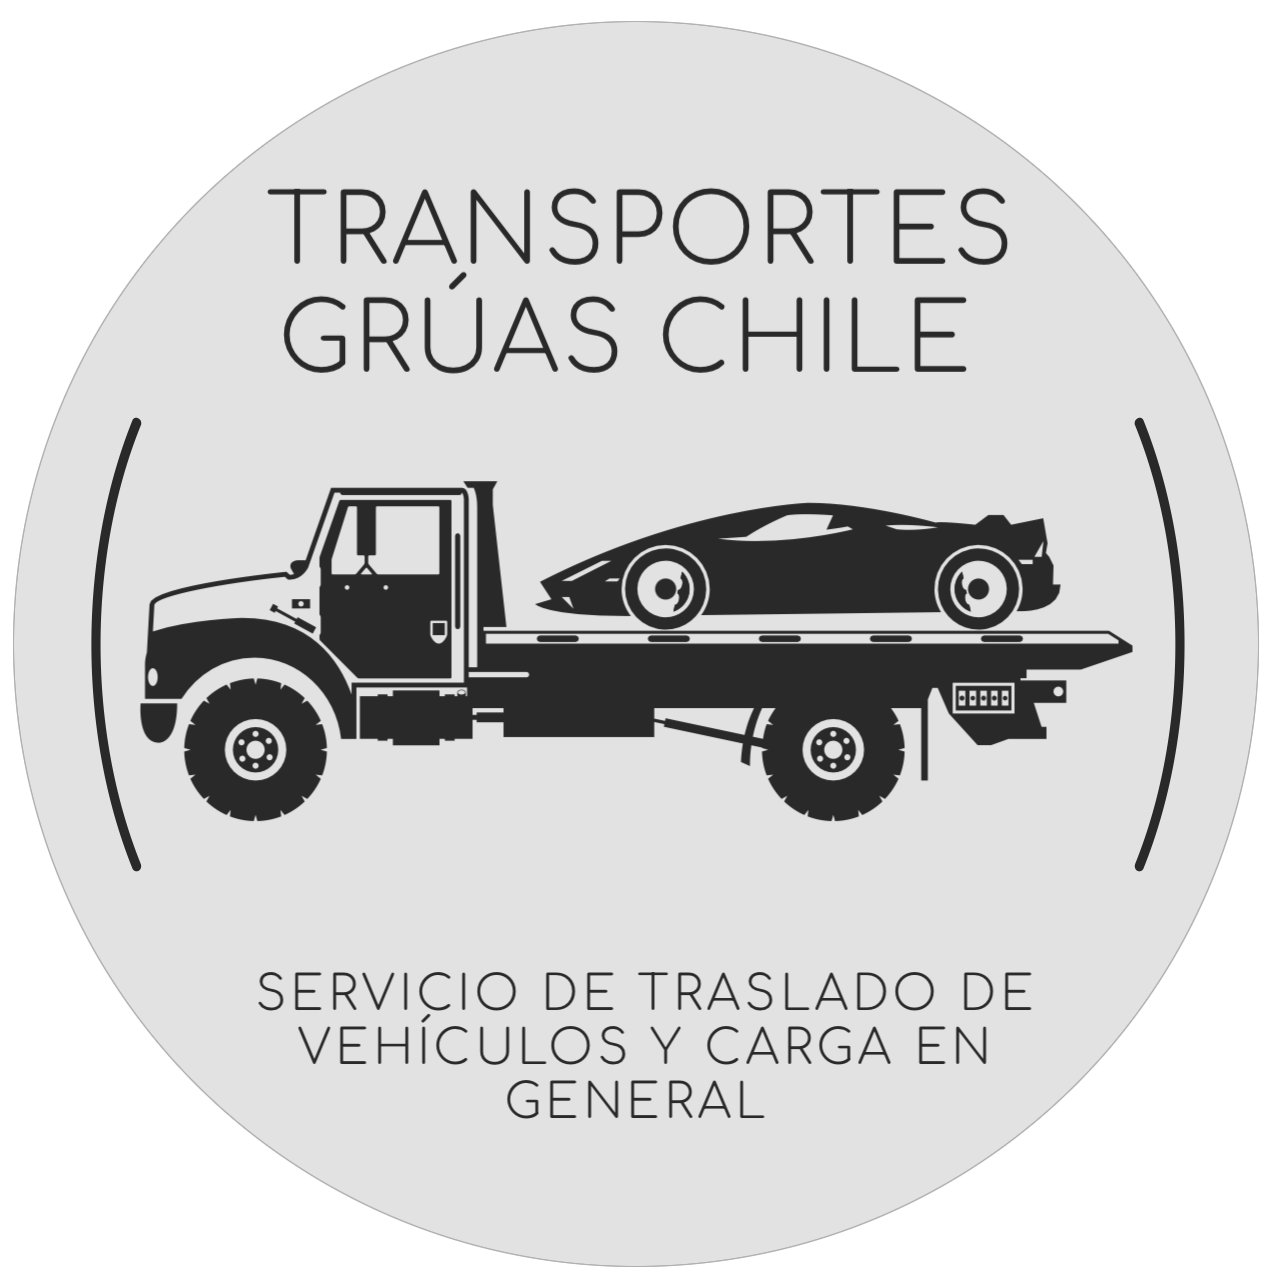 TRANSPORTE GRUAS CHILE